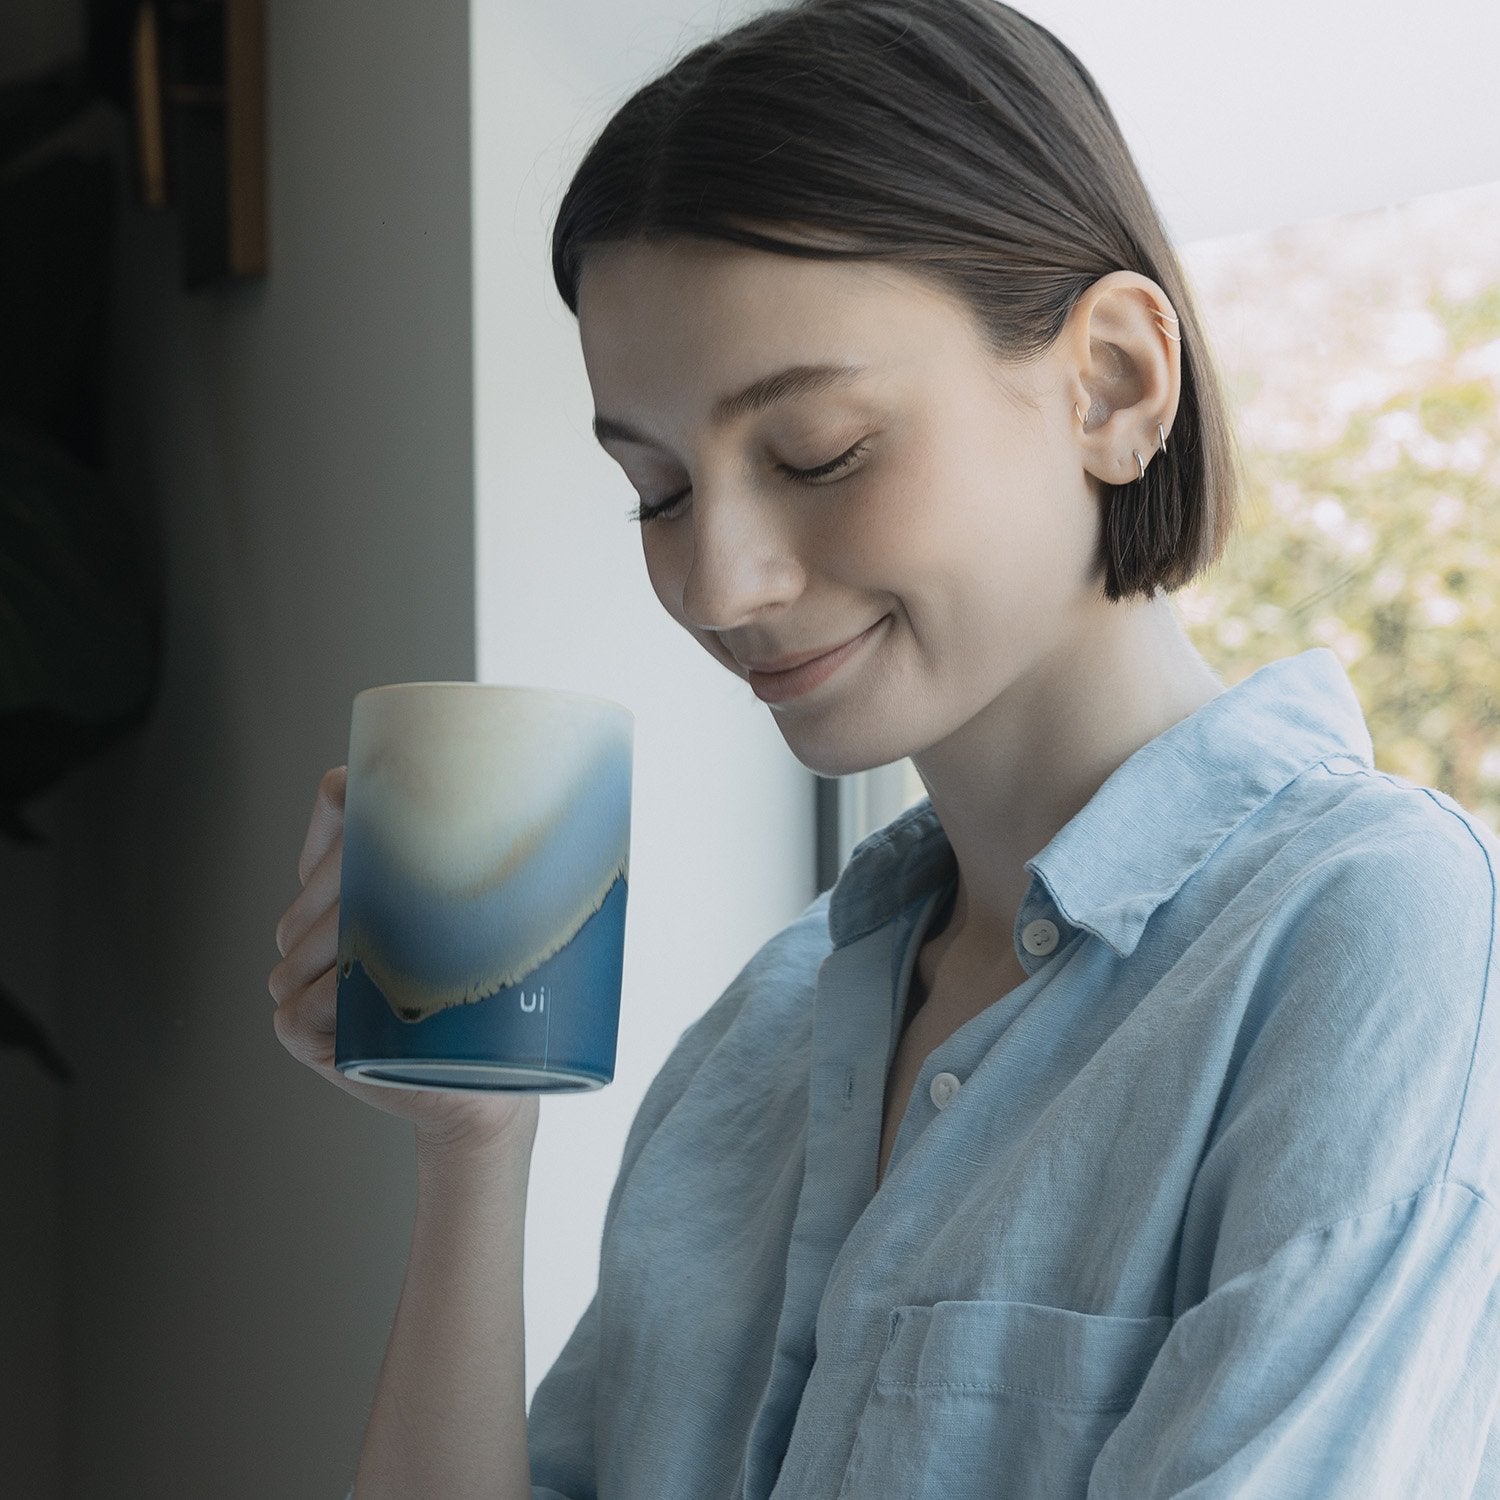 Smiling woman holding blue mug with design